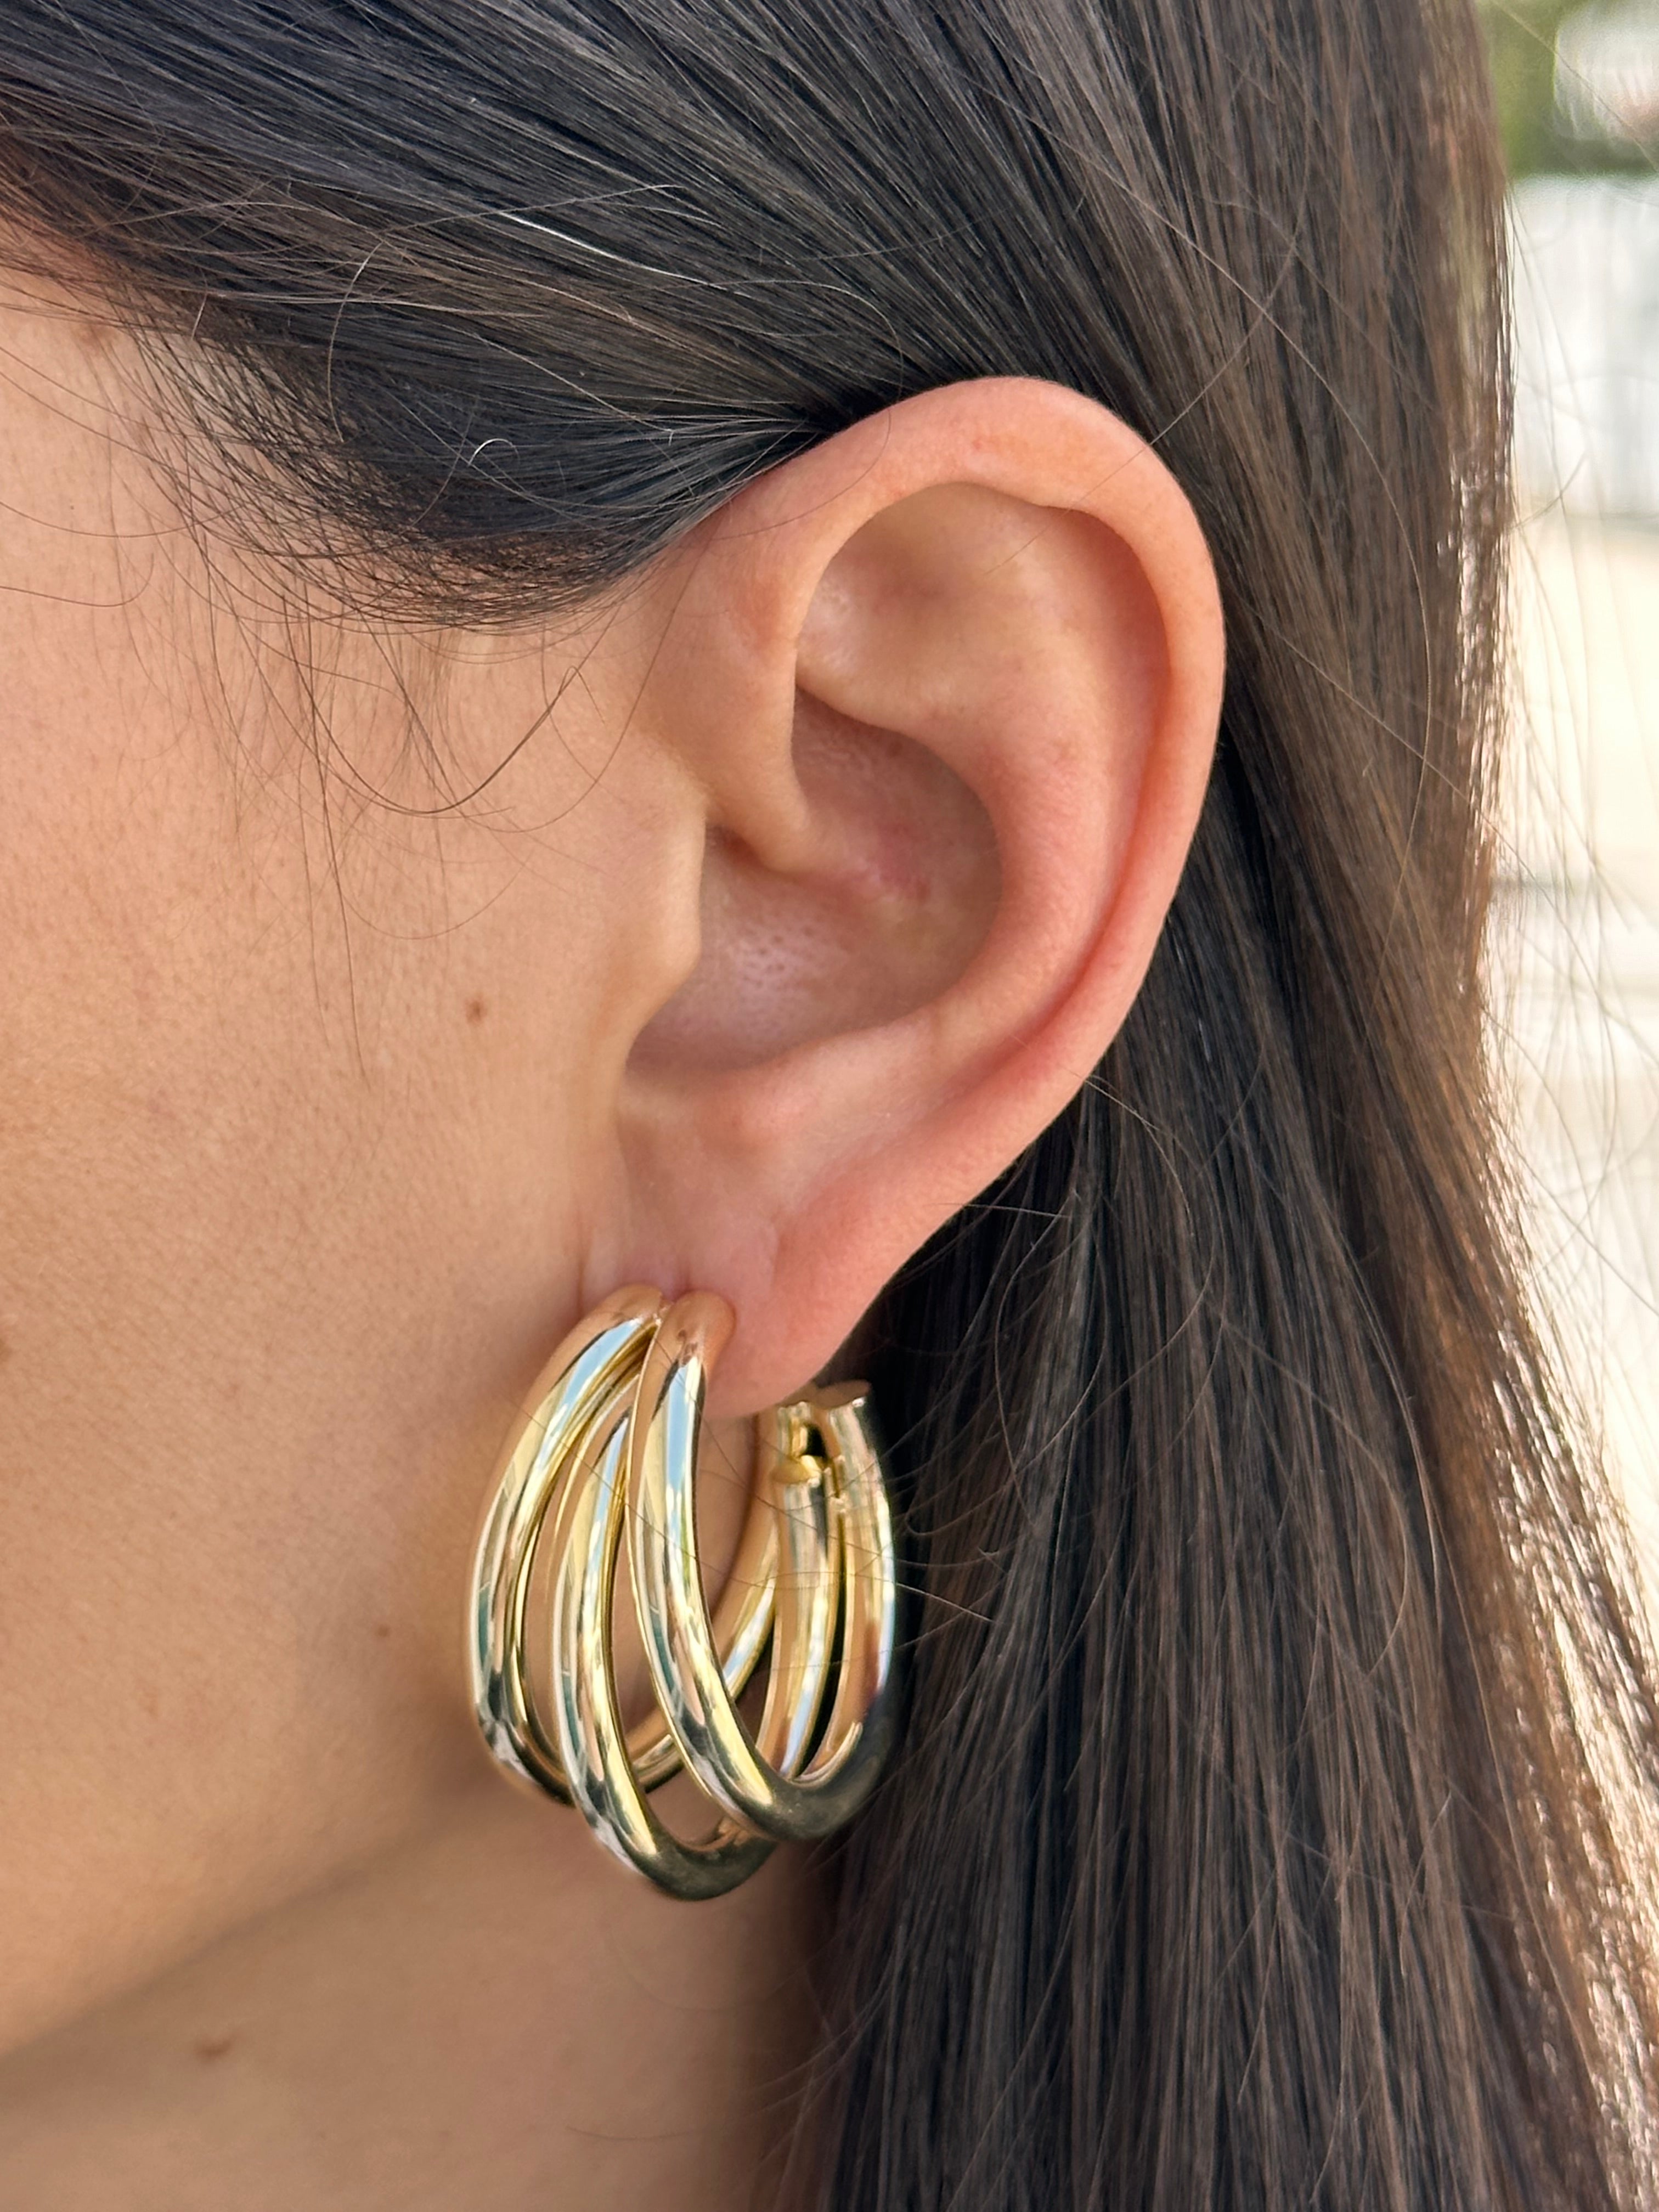 Gold Earring Images - Dhanalakshmi Jewellers